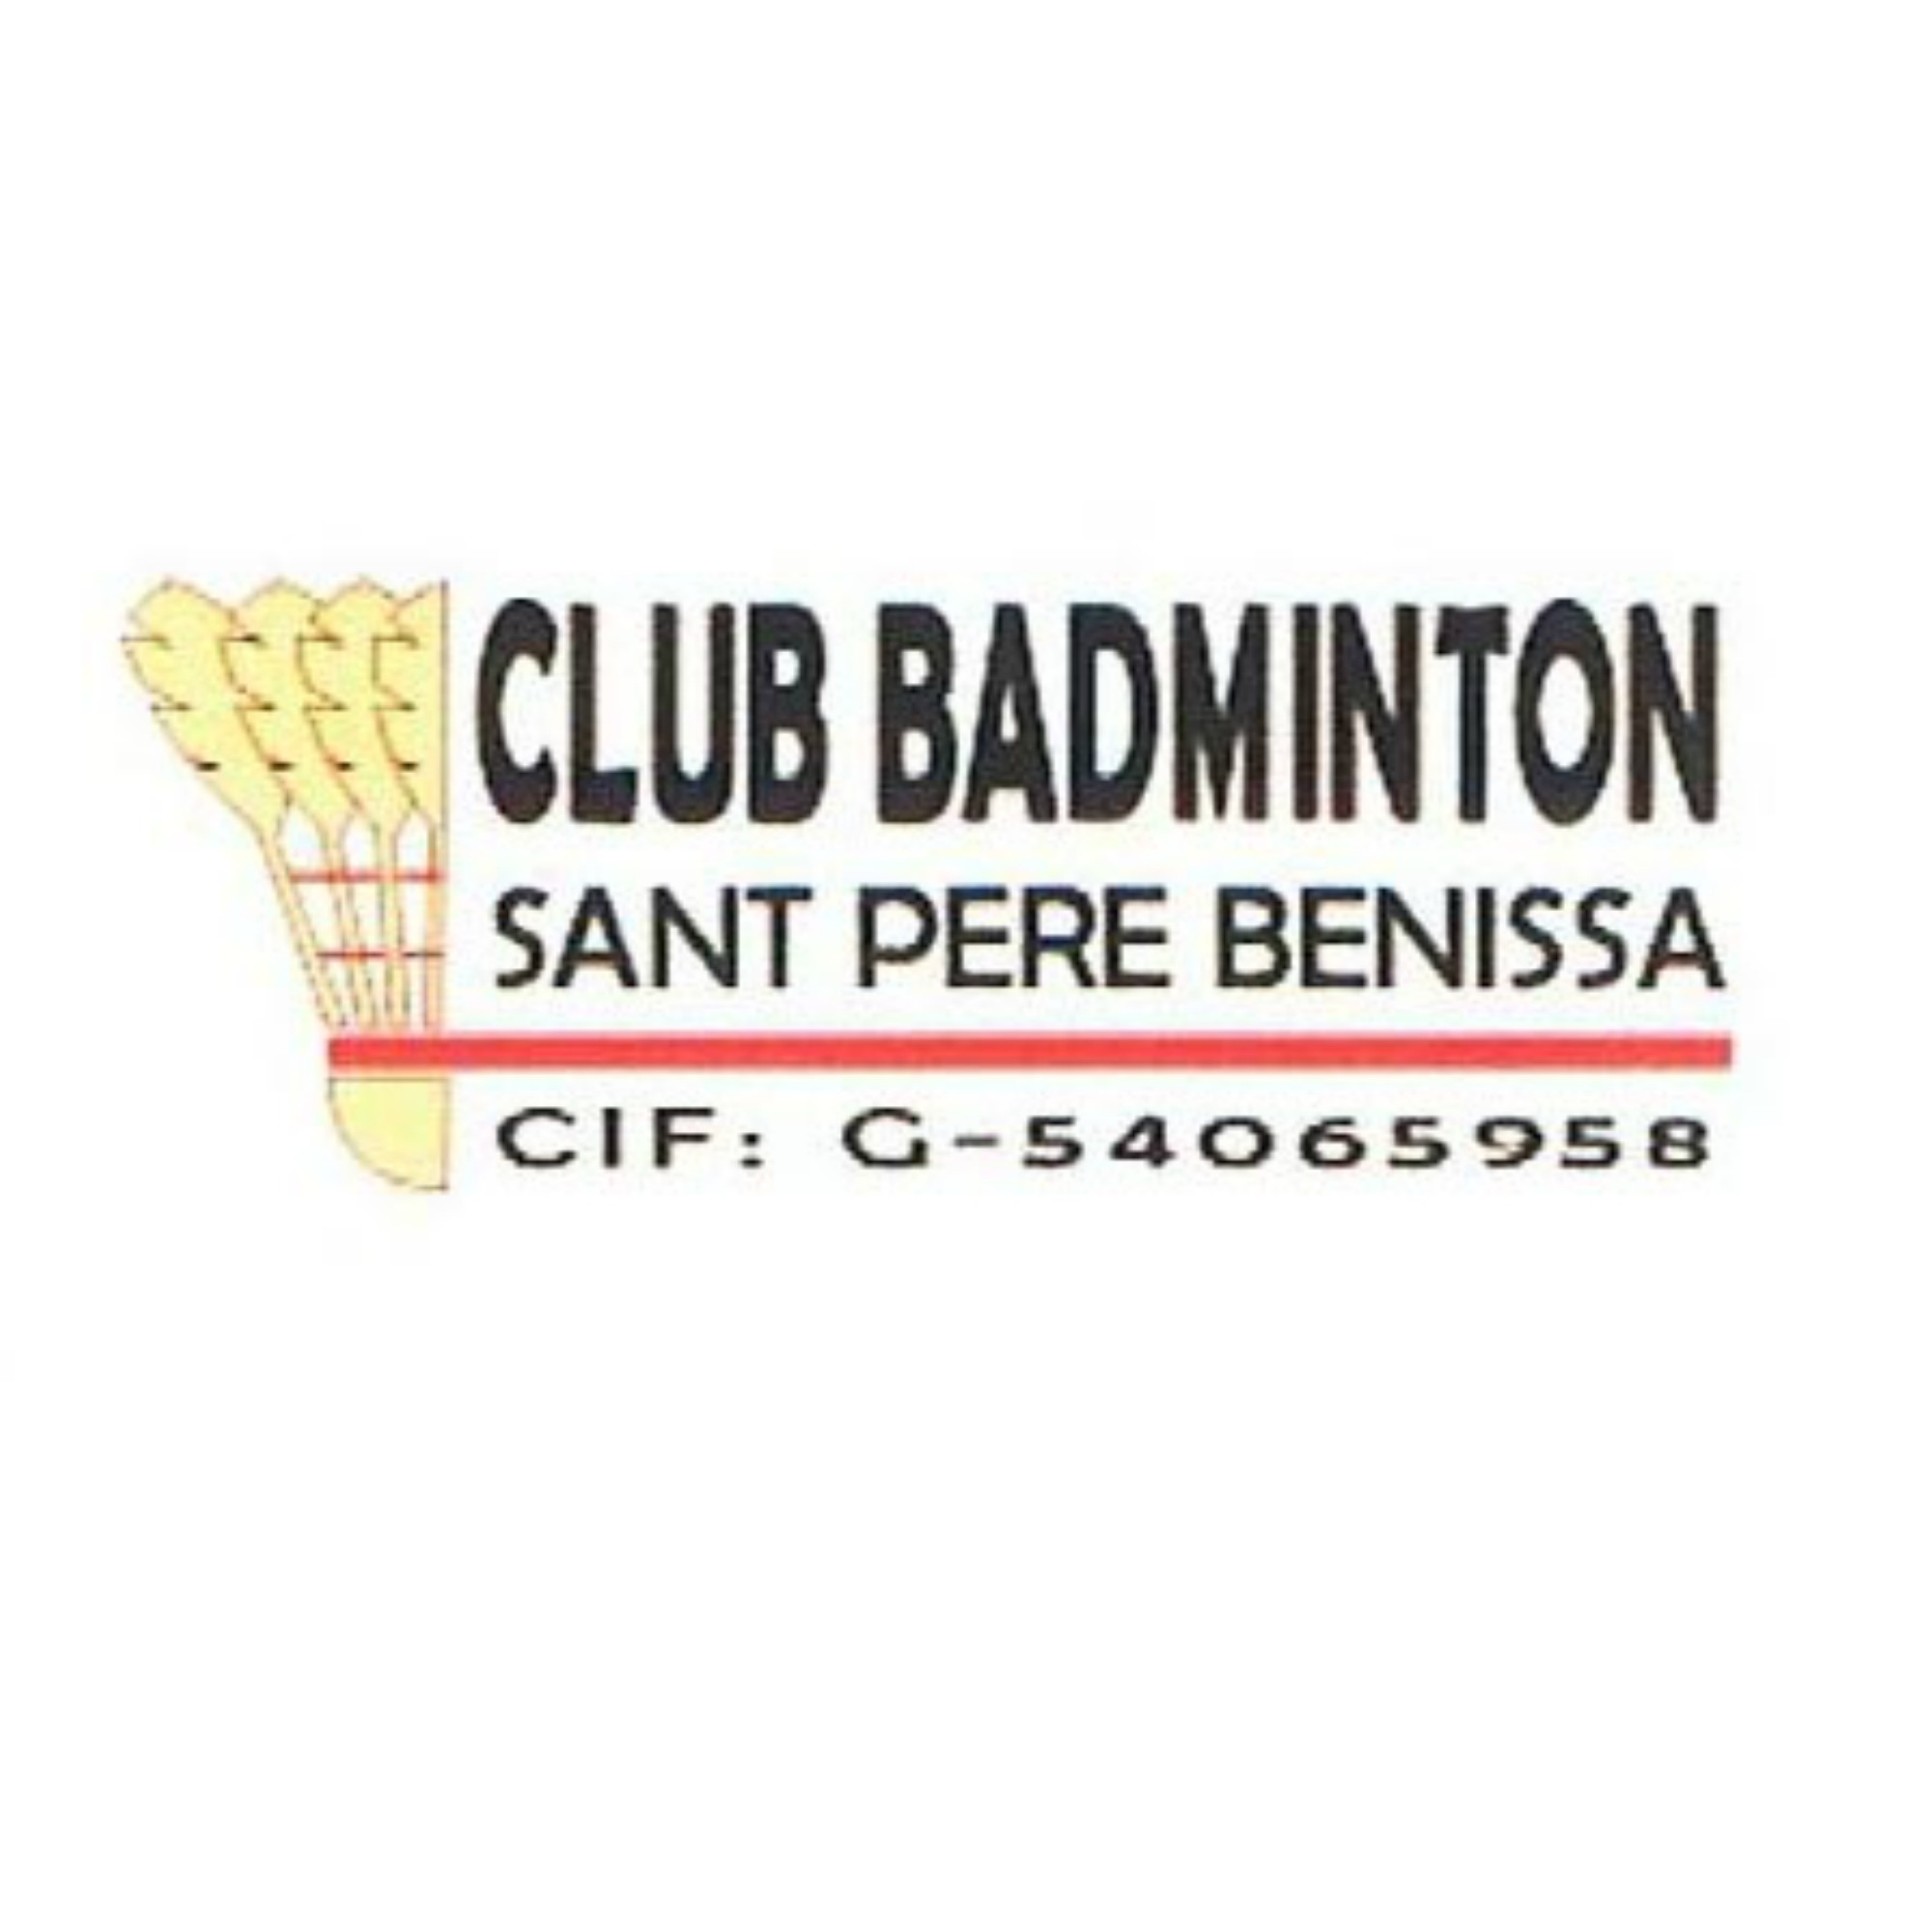 Club Badminton Sant Pere